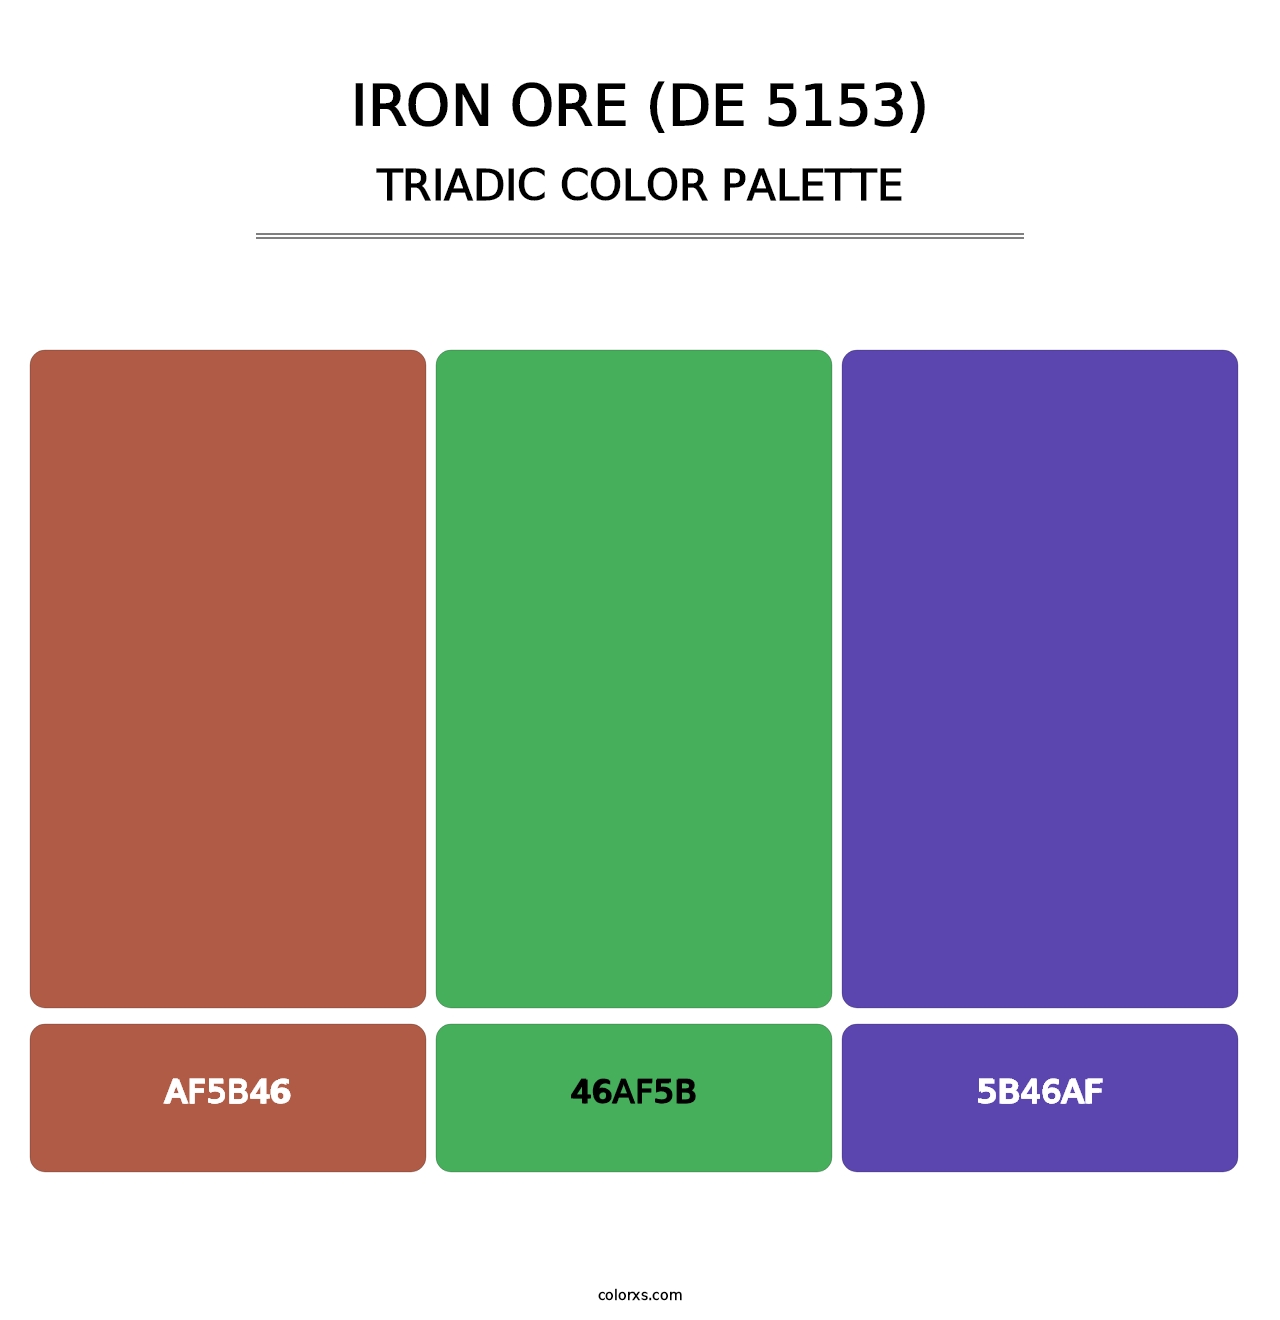 Iron Ore (DE 5153) - Triadic Color Palette